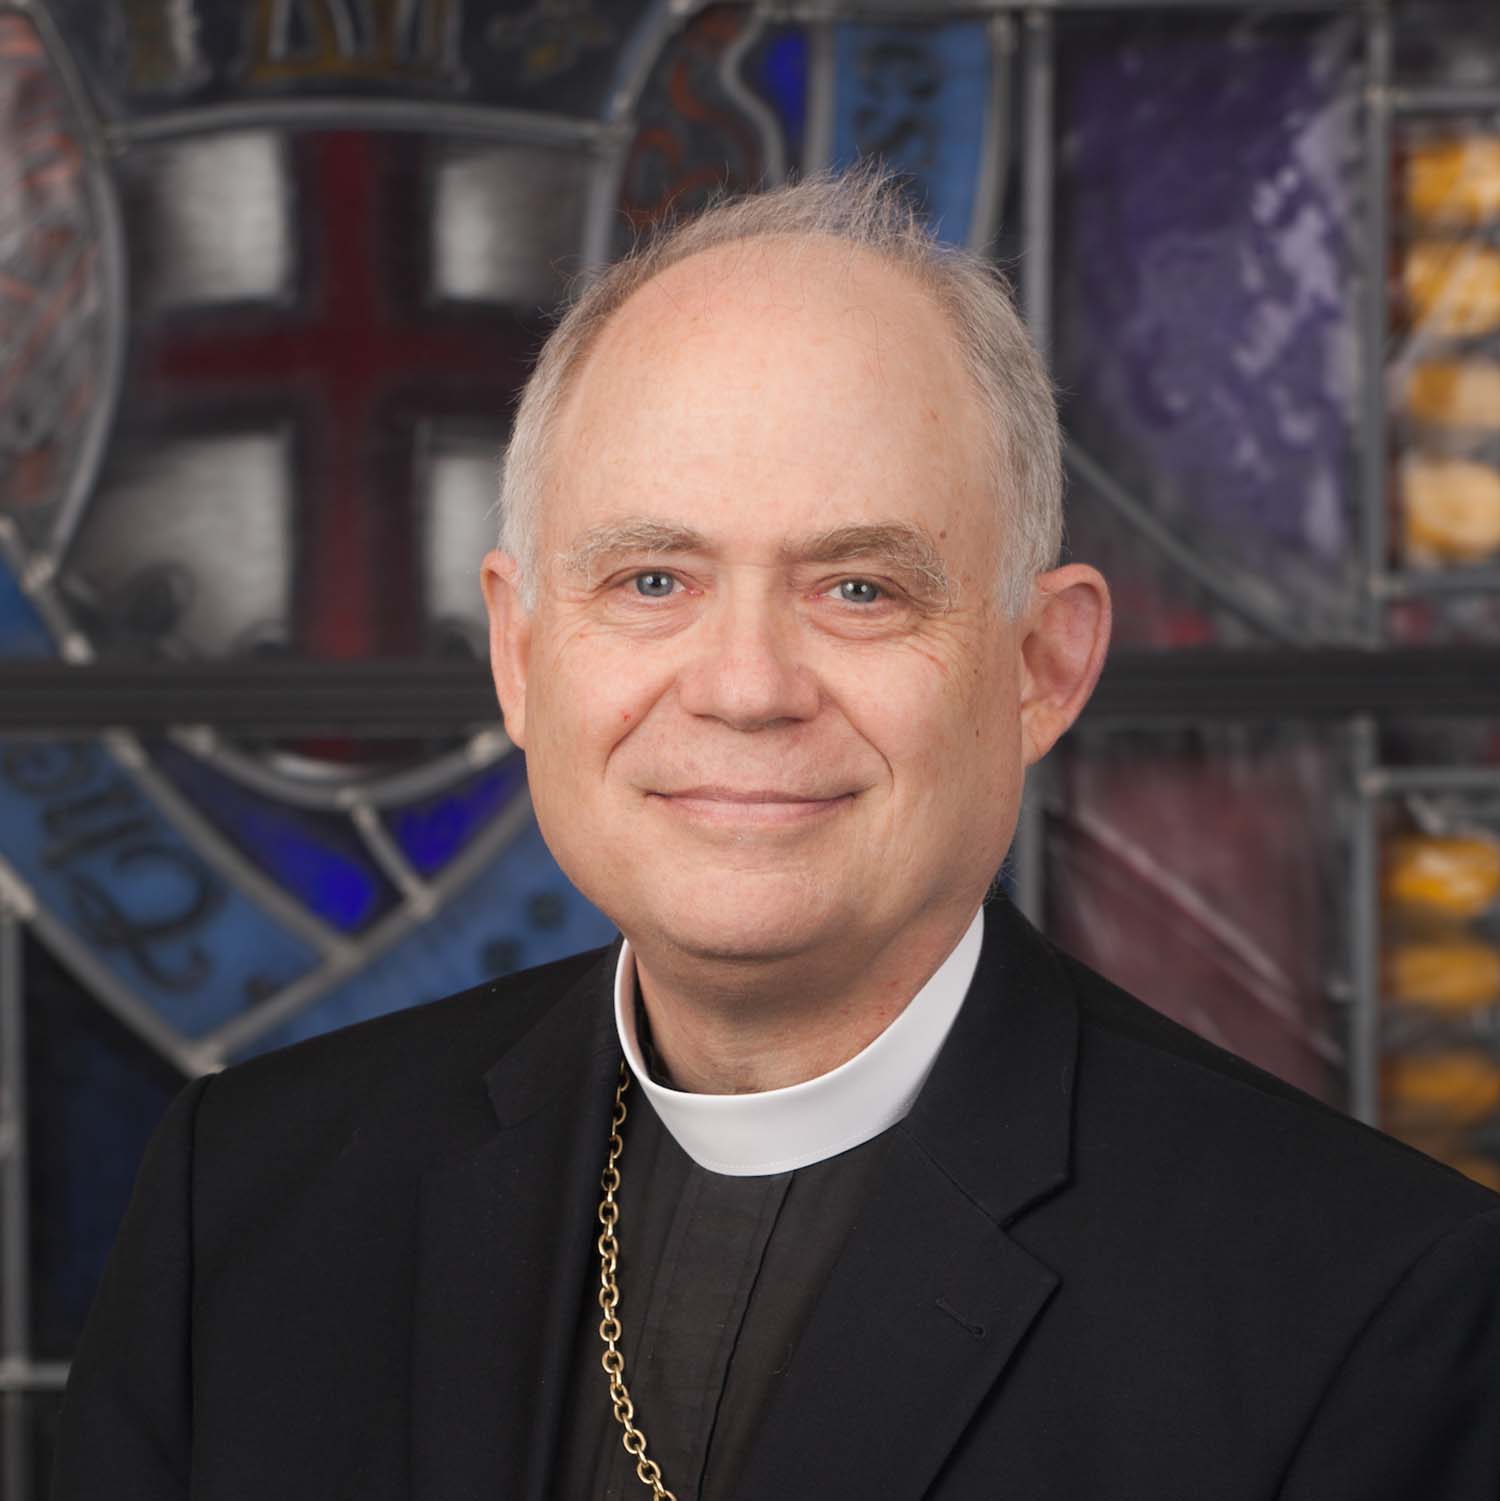 Rt. Rev’d John C. Bauerschmidt